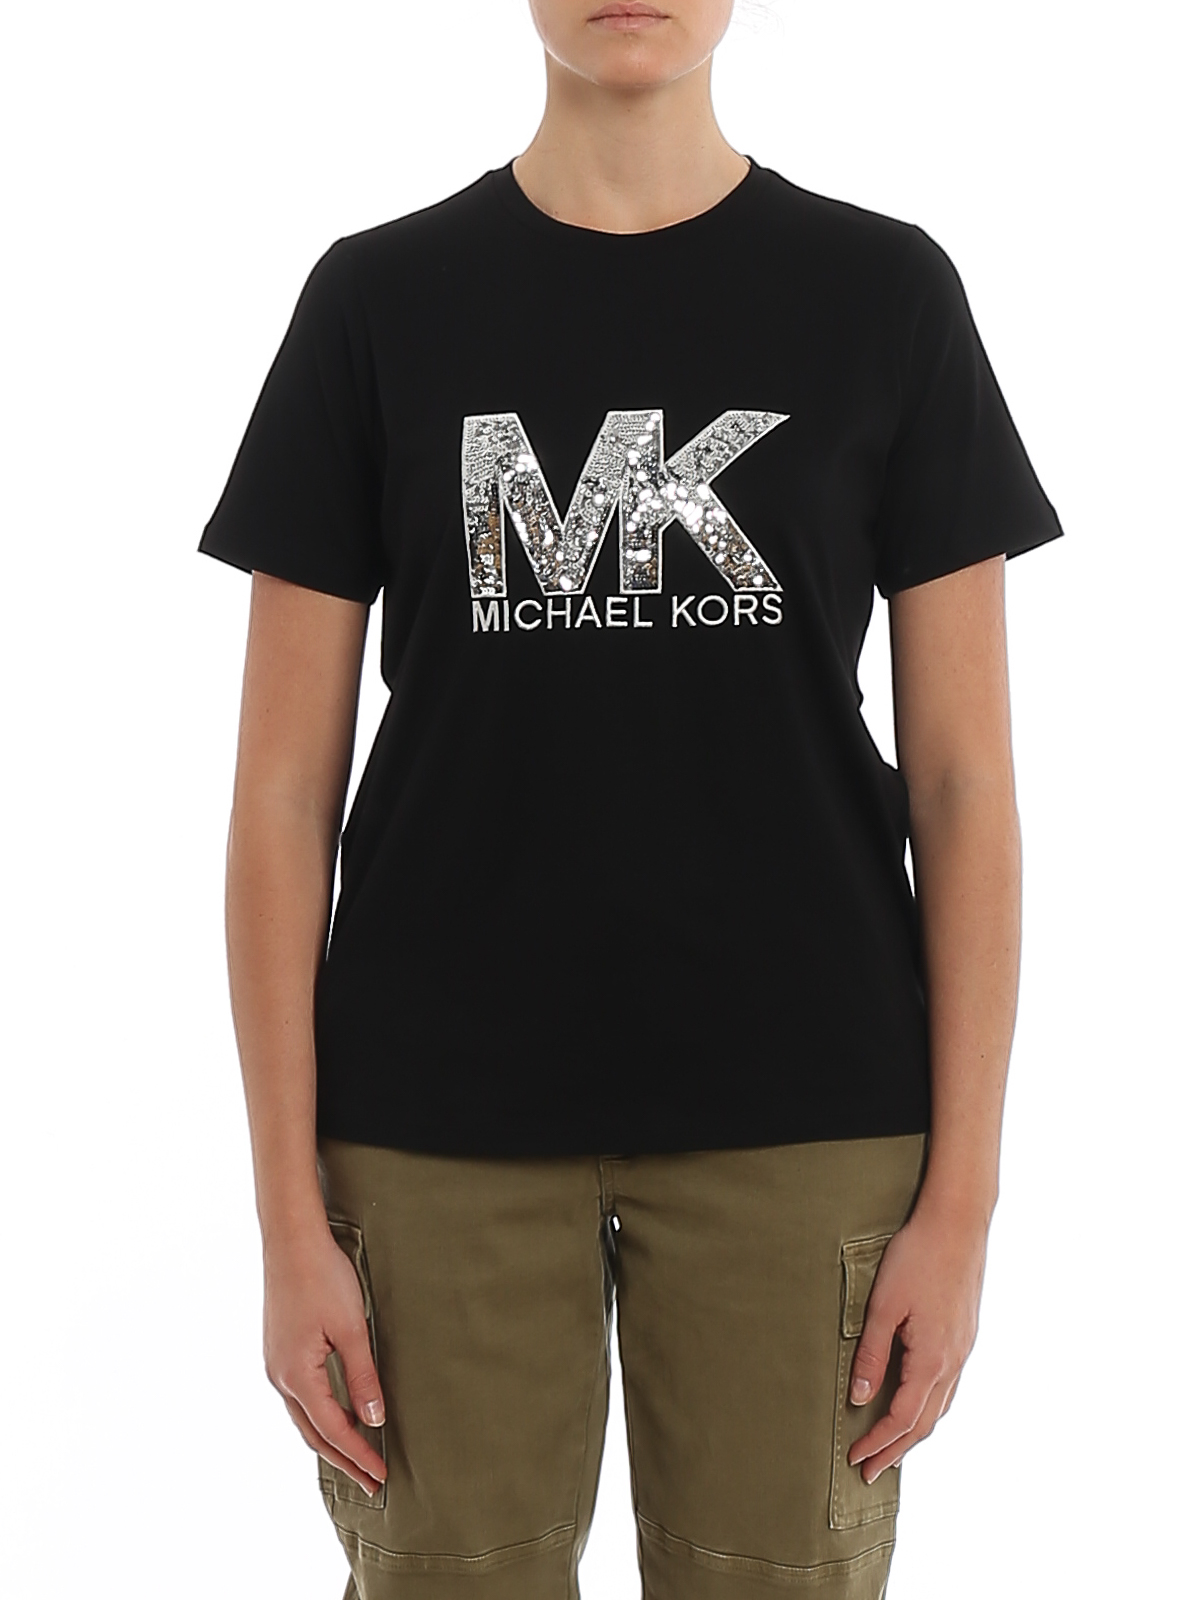 Camisetas Michael Kors - Camiseta - Negro - MH95MCE97J001 